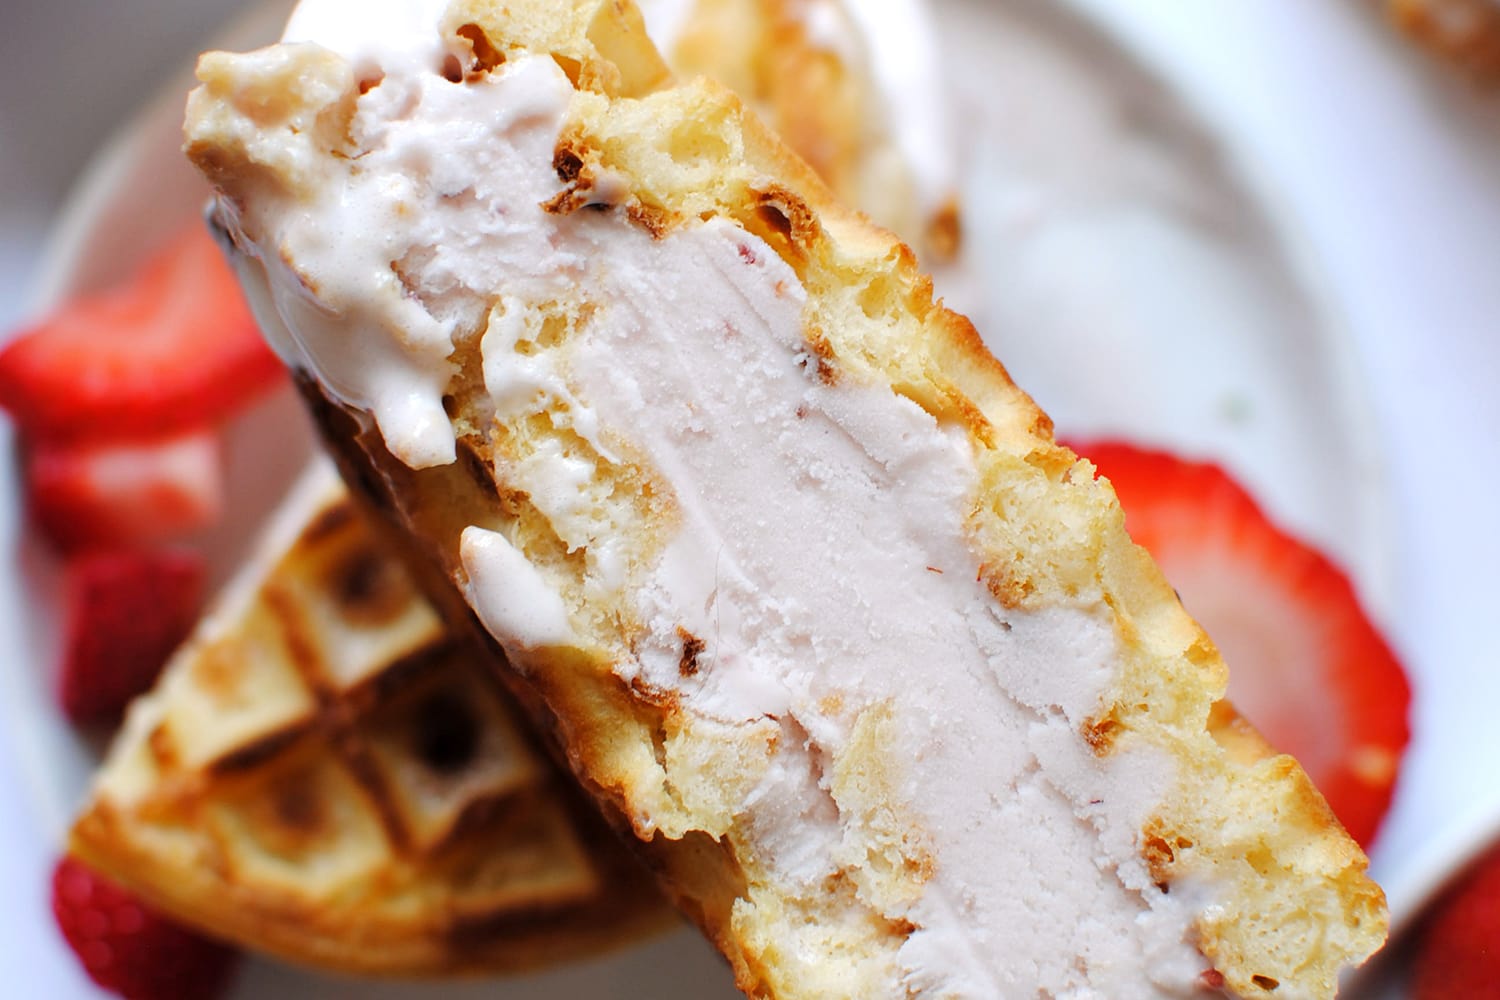 https://www.letseatcake.com/wp-content/uploads/2017/06/Waffle-Ice-Cream-Sandwiches.jpg